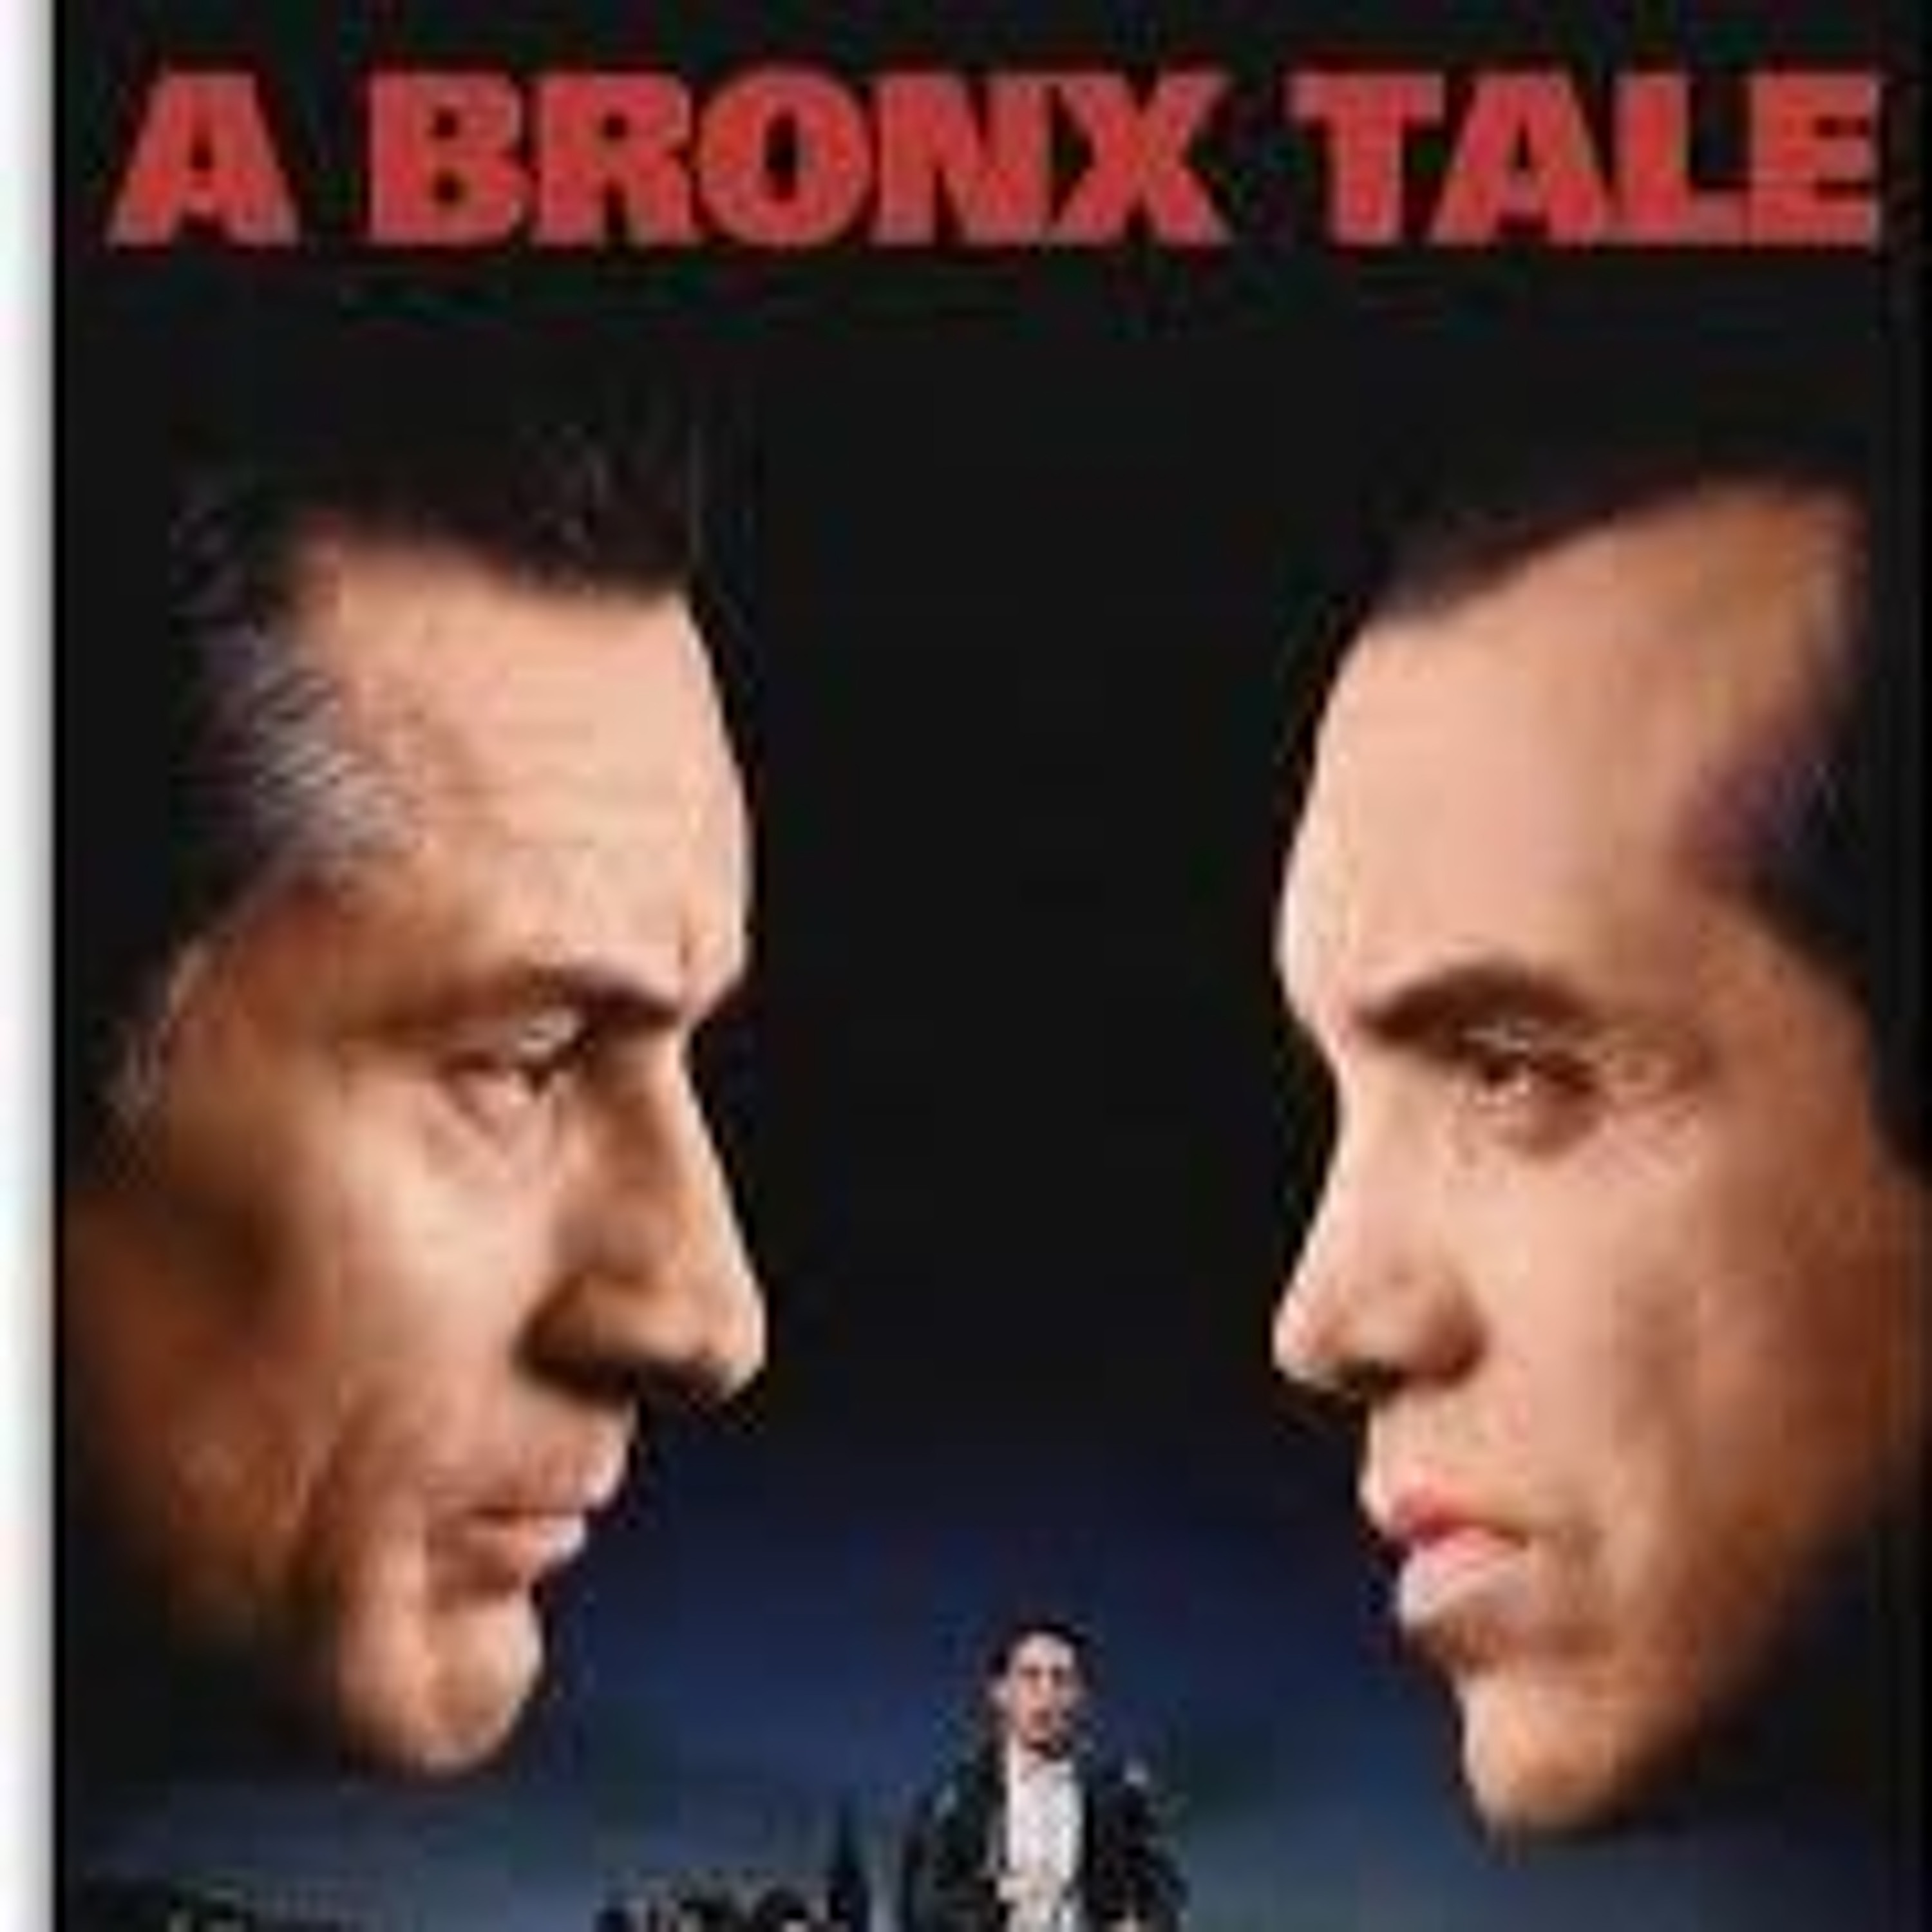 205 - A Bronx Tale